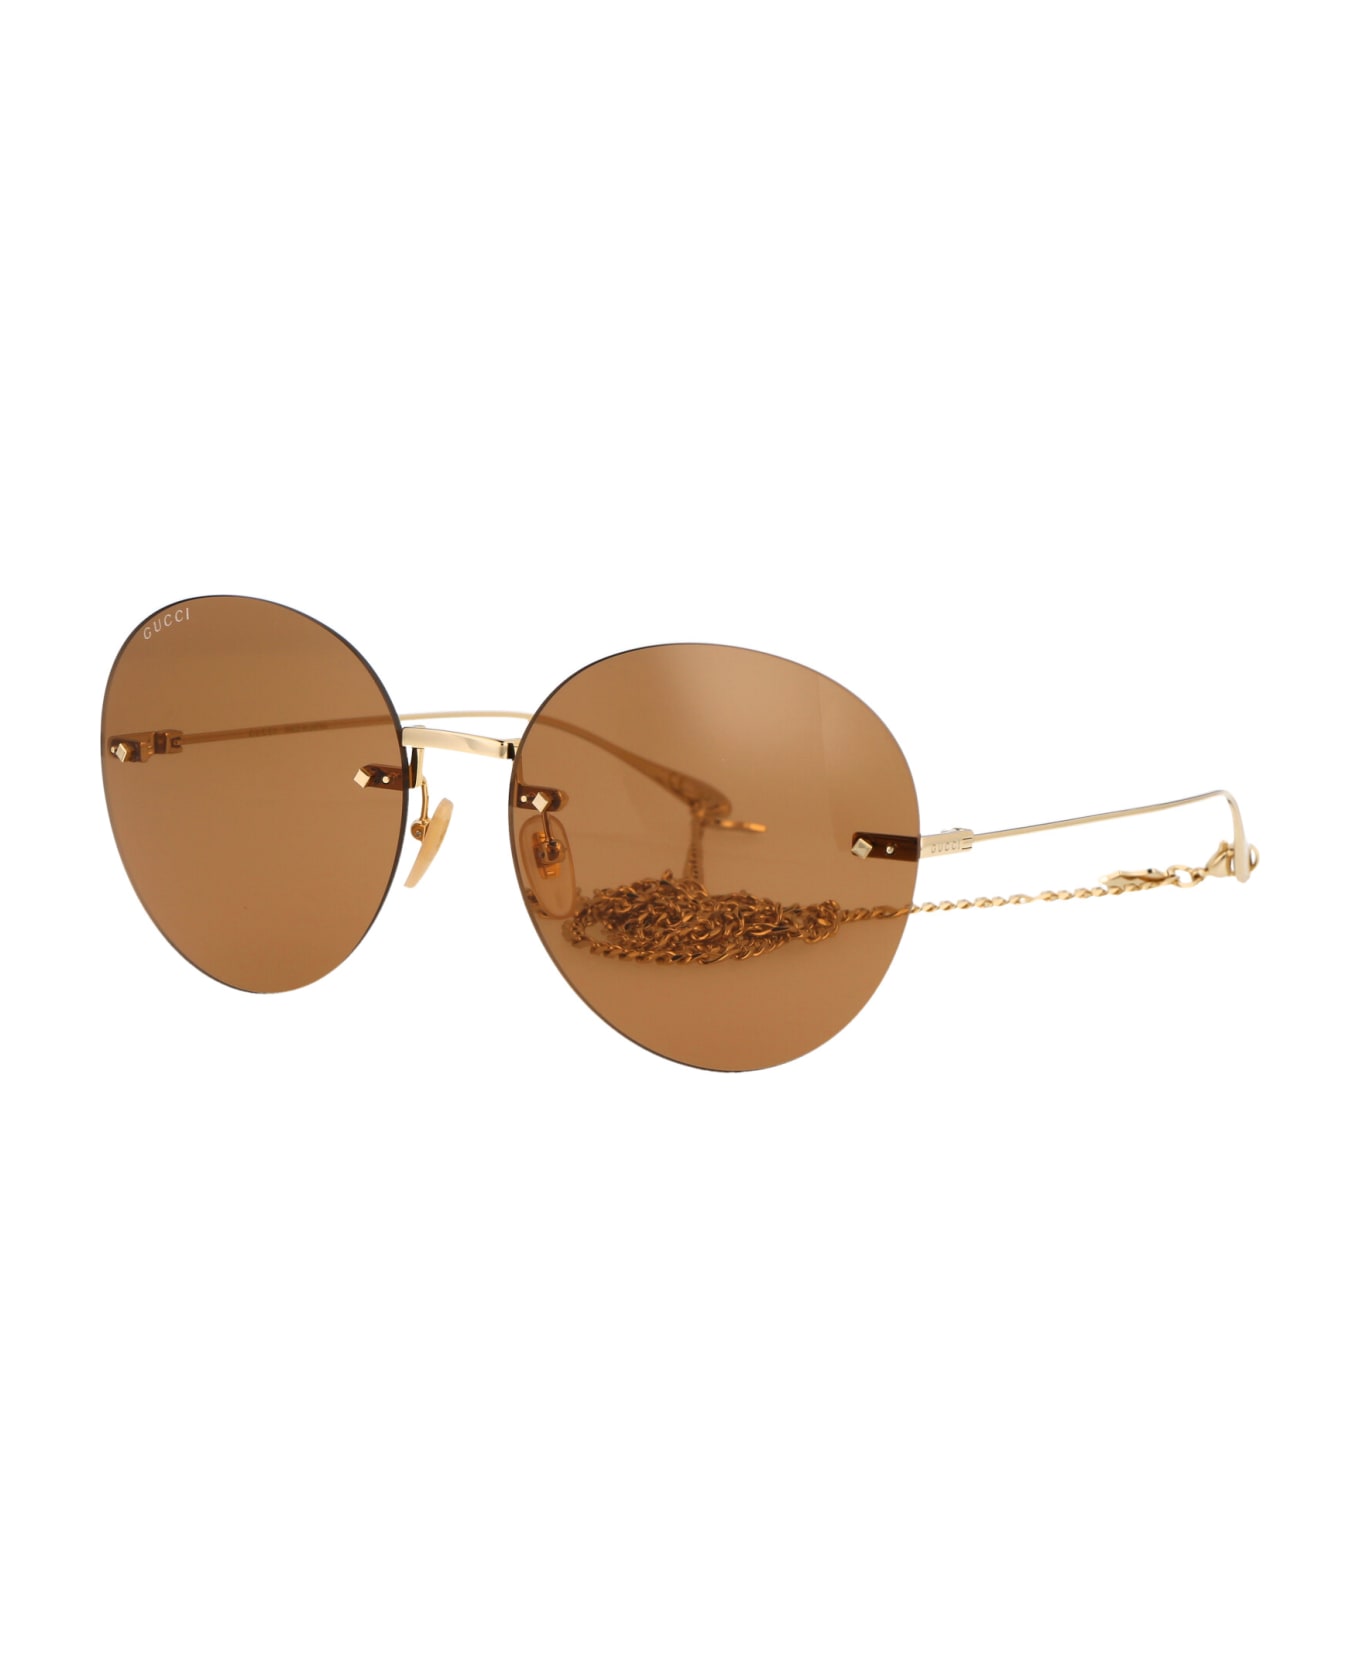 Gucci Eyewear Gg1149s Sunglasses - 003 GOLD GOLD BROWN サングラス